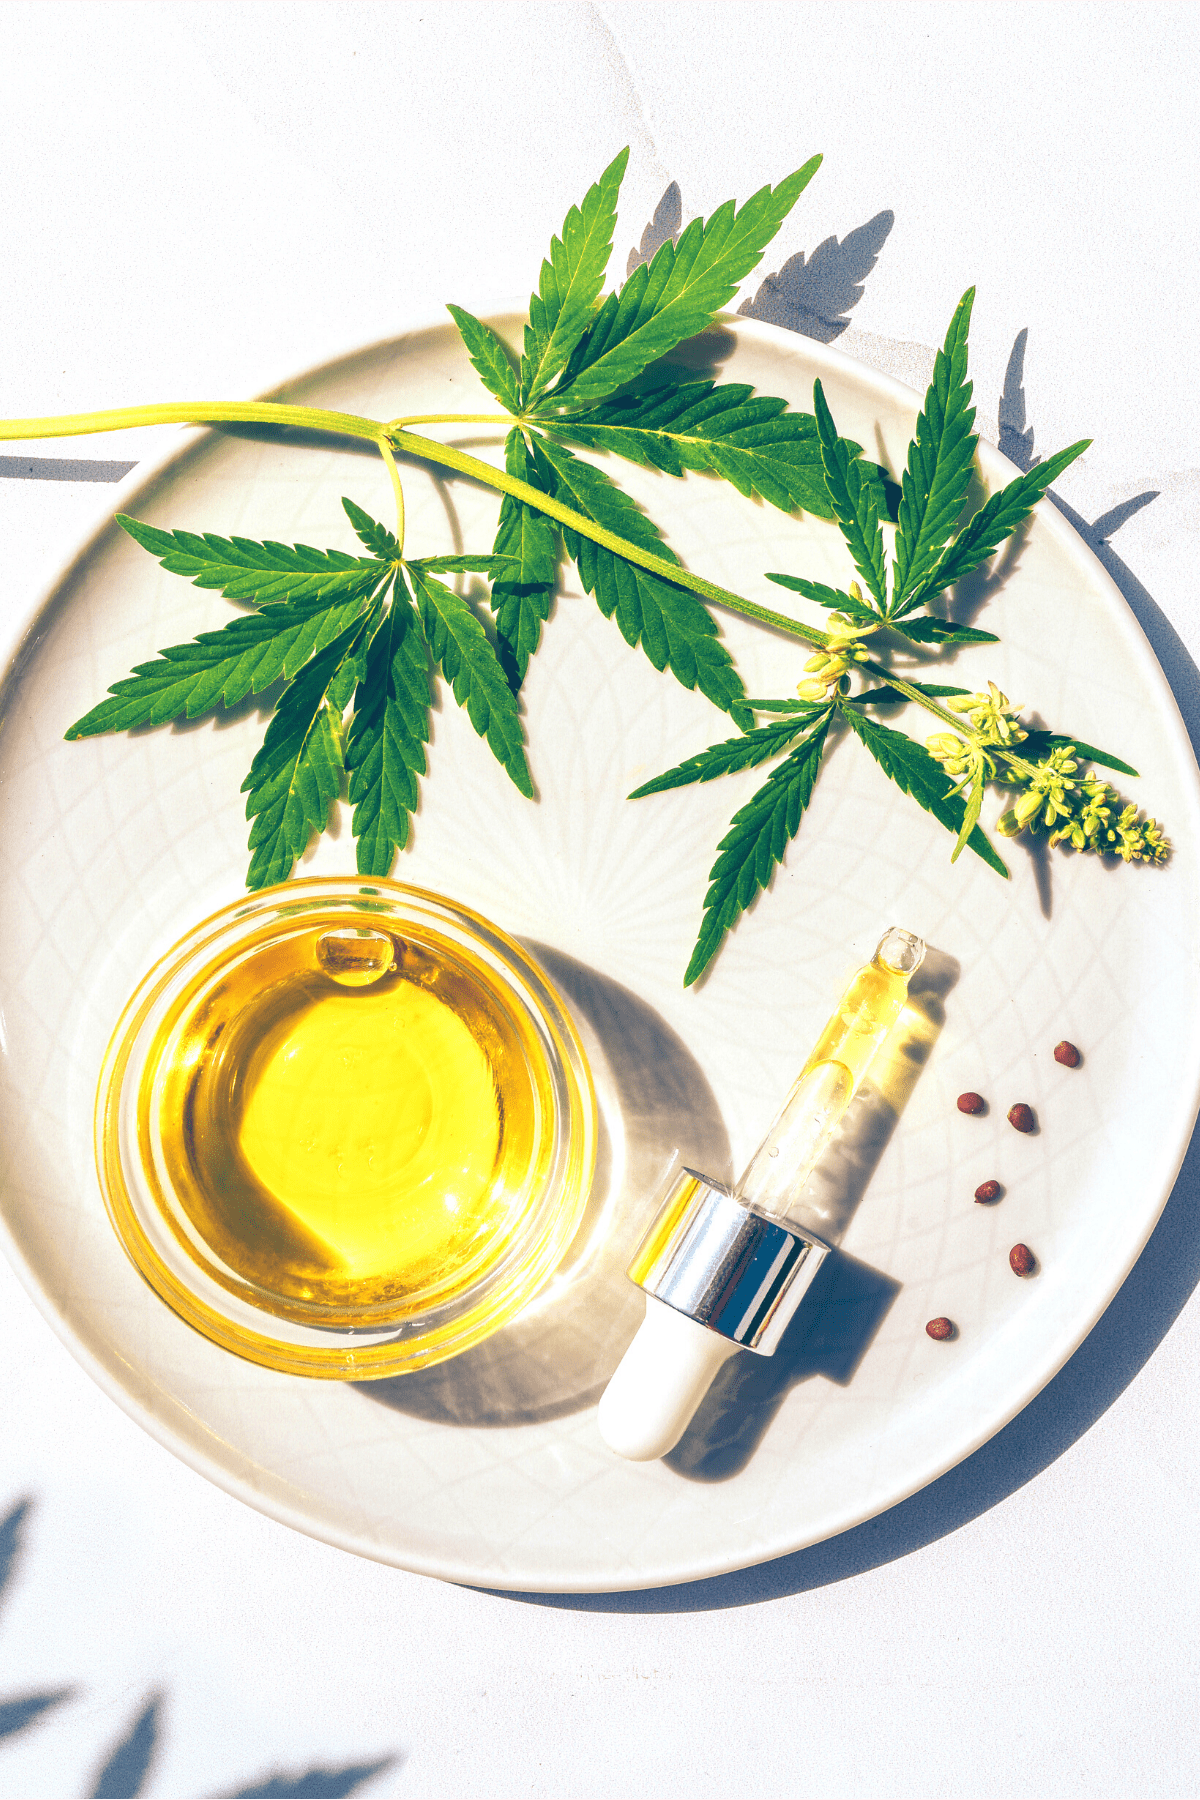 A white plate with a cannabis leaf and cannabis oil